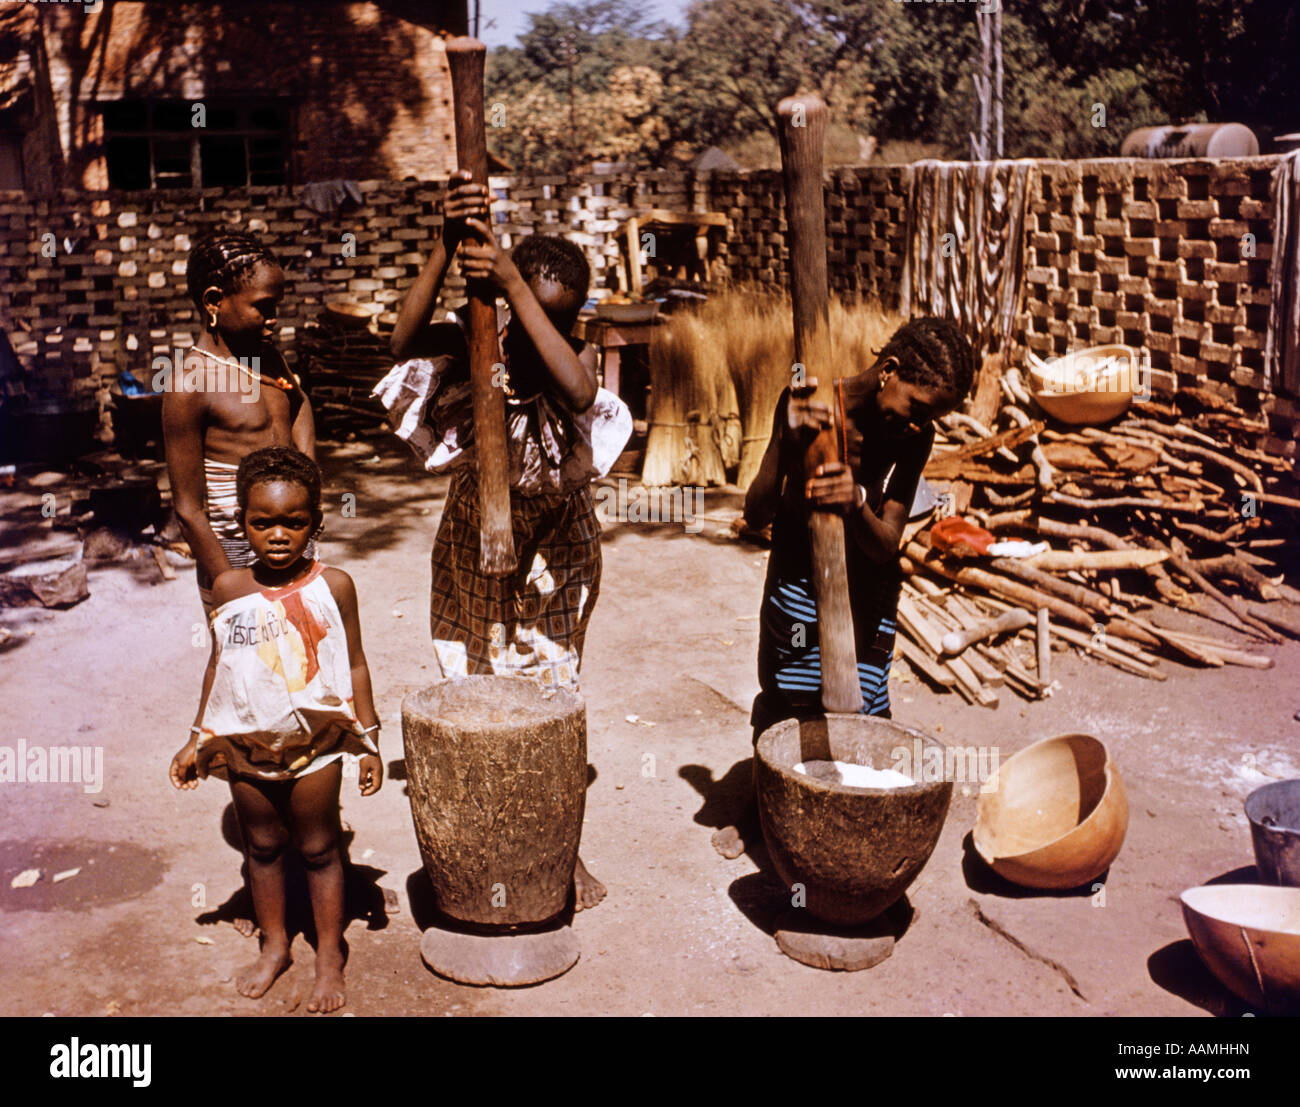 GRINDING MILLET MORTAR PESTLE PRIMITIVE FARMING METHODS THIRD WORLD MALI AFRICA Stock Photo